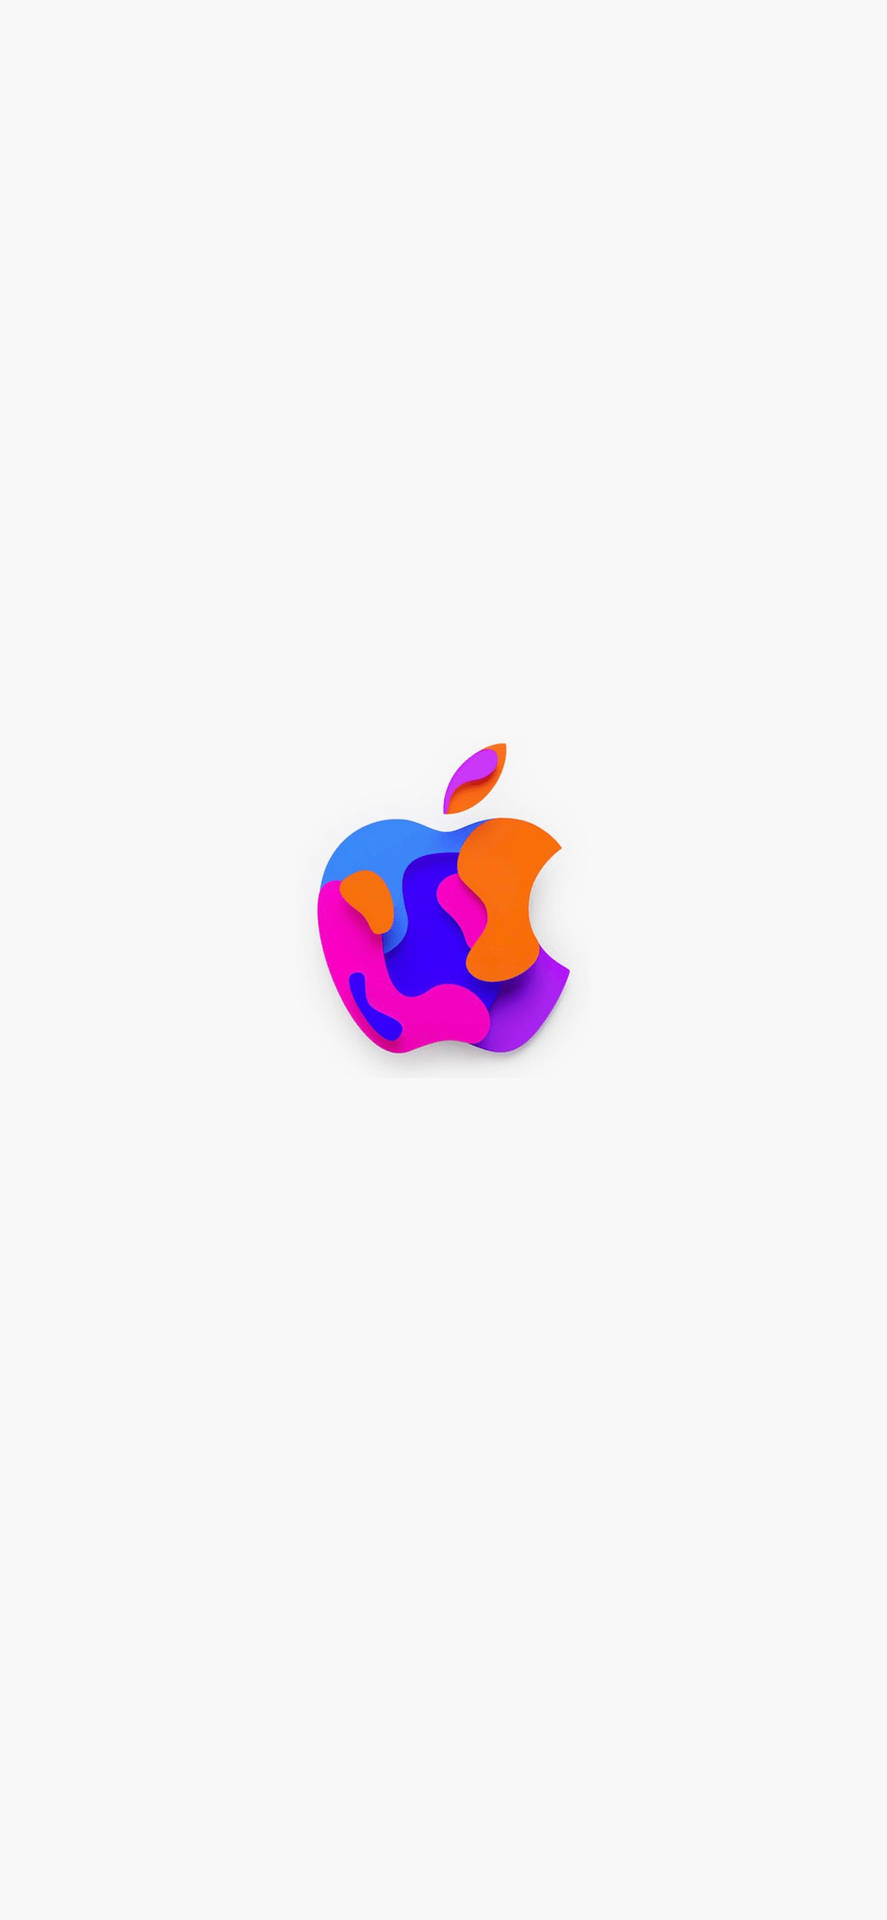 Vibrant Apple Logo Iphone Background